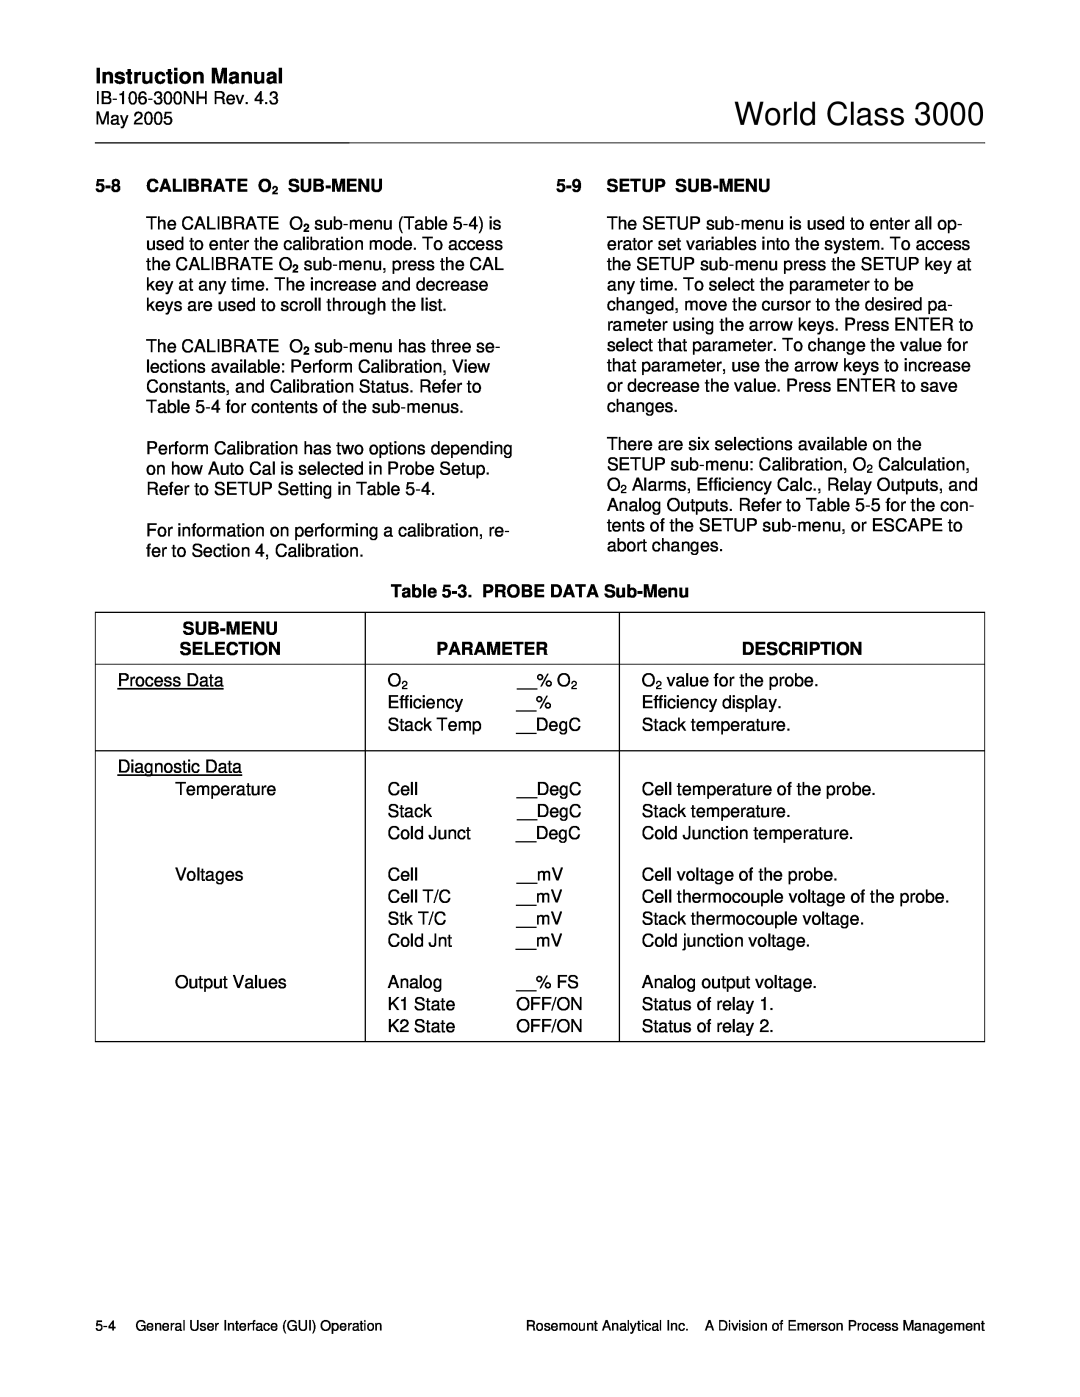 Emerson 3000 World Class, Instruction Manual, 5-8CALIBRATE O2 SUB-MENU, 5-9SETUP SUB-MENU, 3.PROBE DATA Sub-Menu 